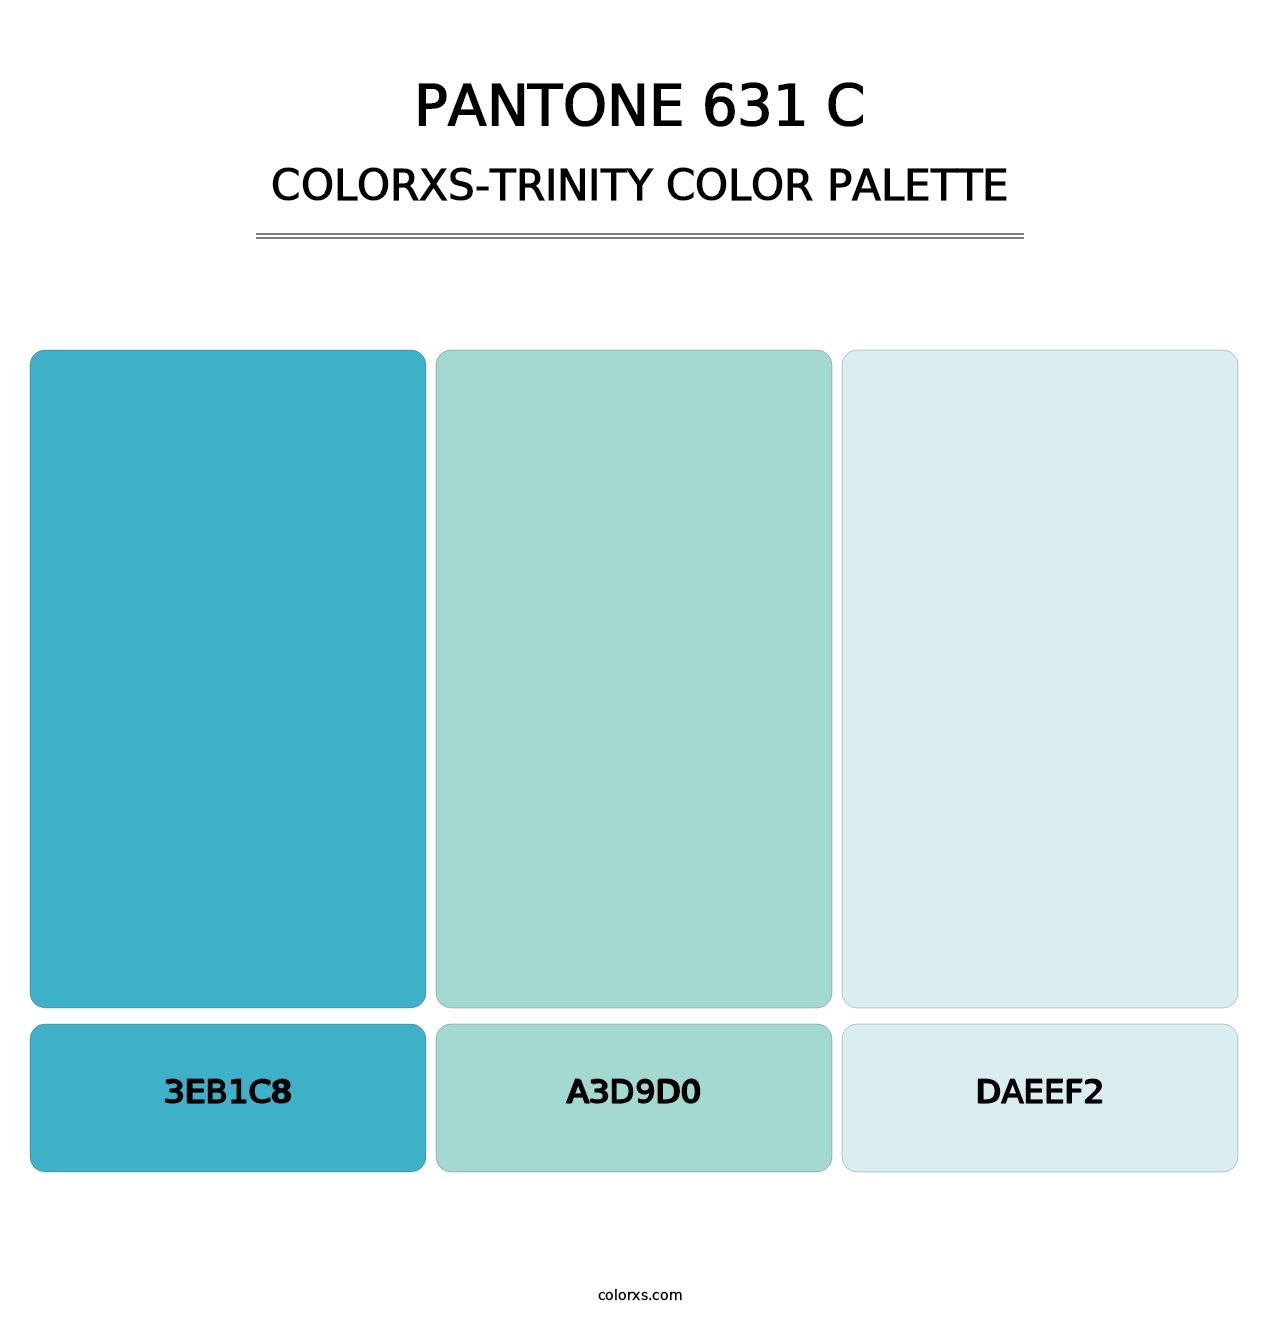 PANTONE 631 C - Colorxs Trinity Palette